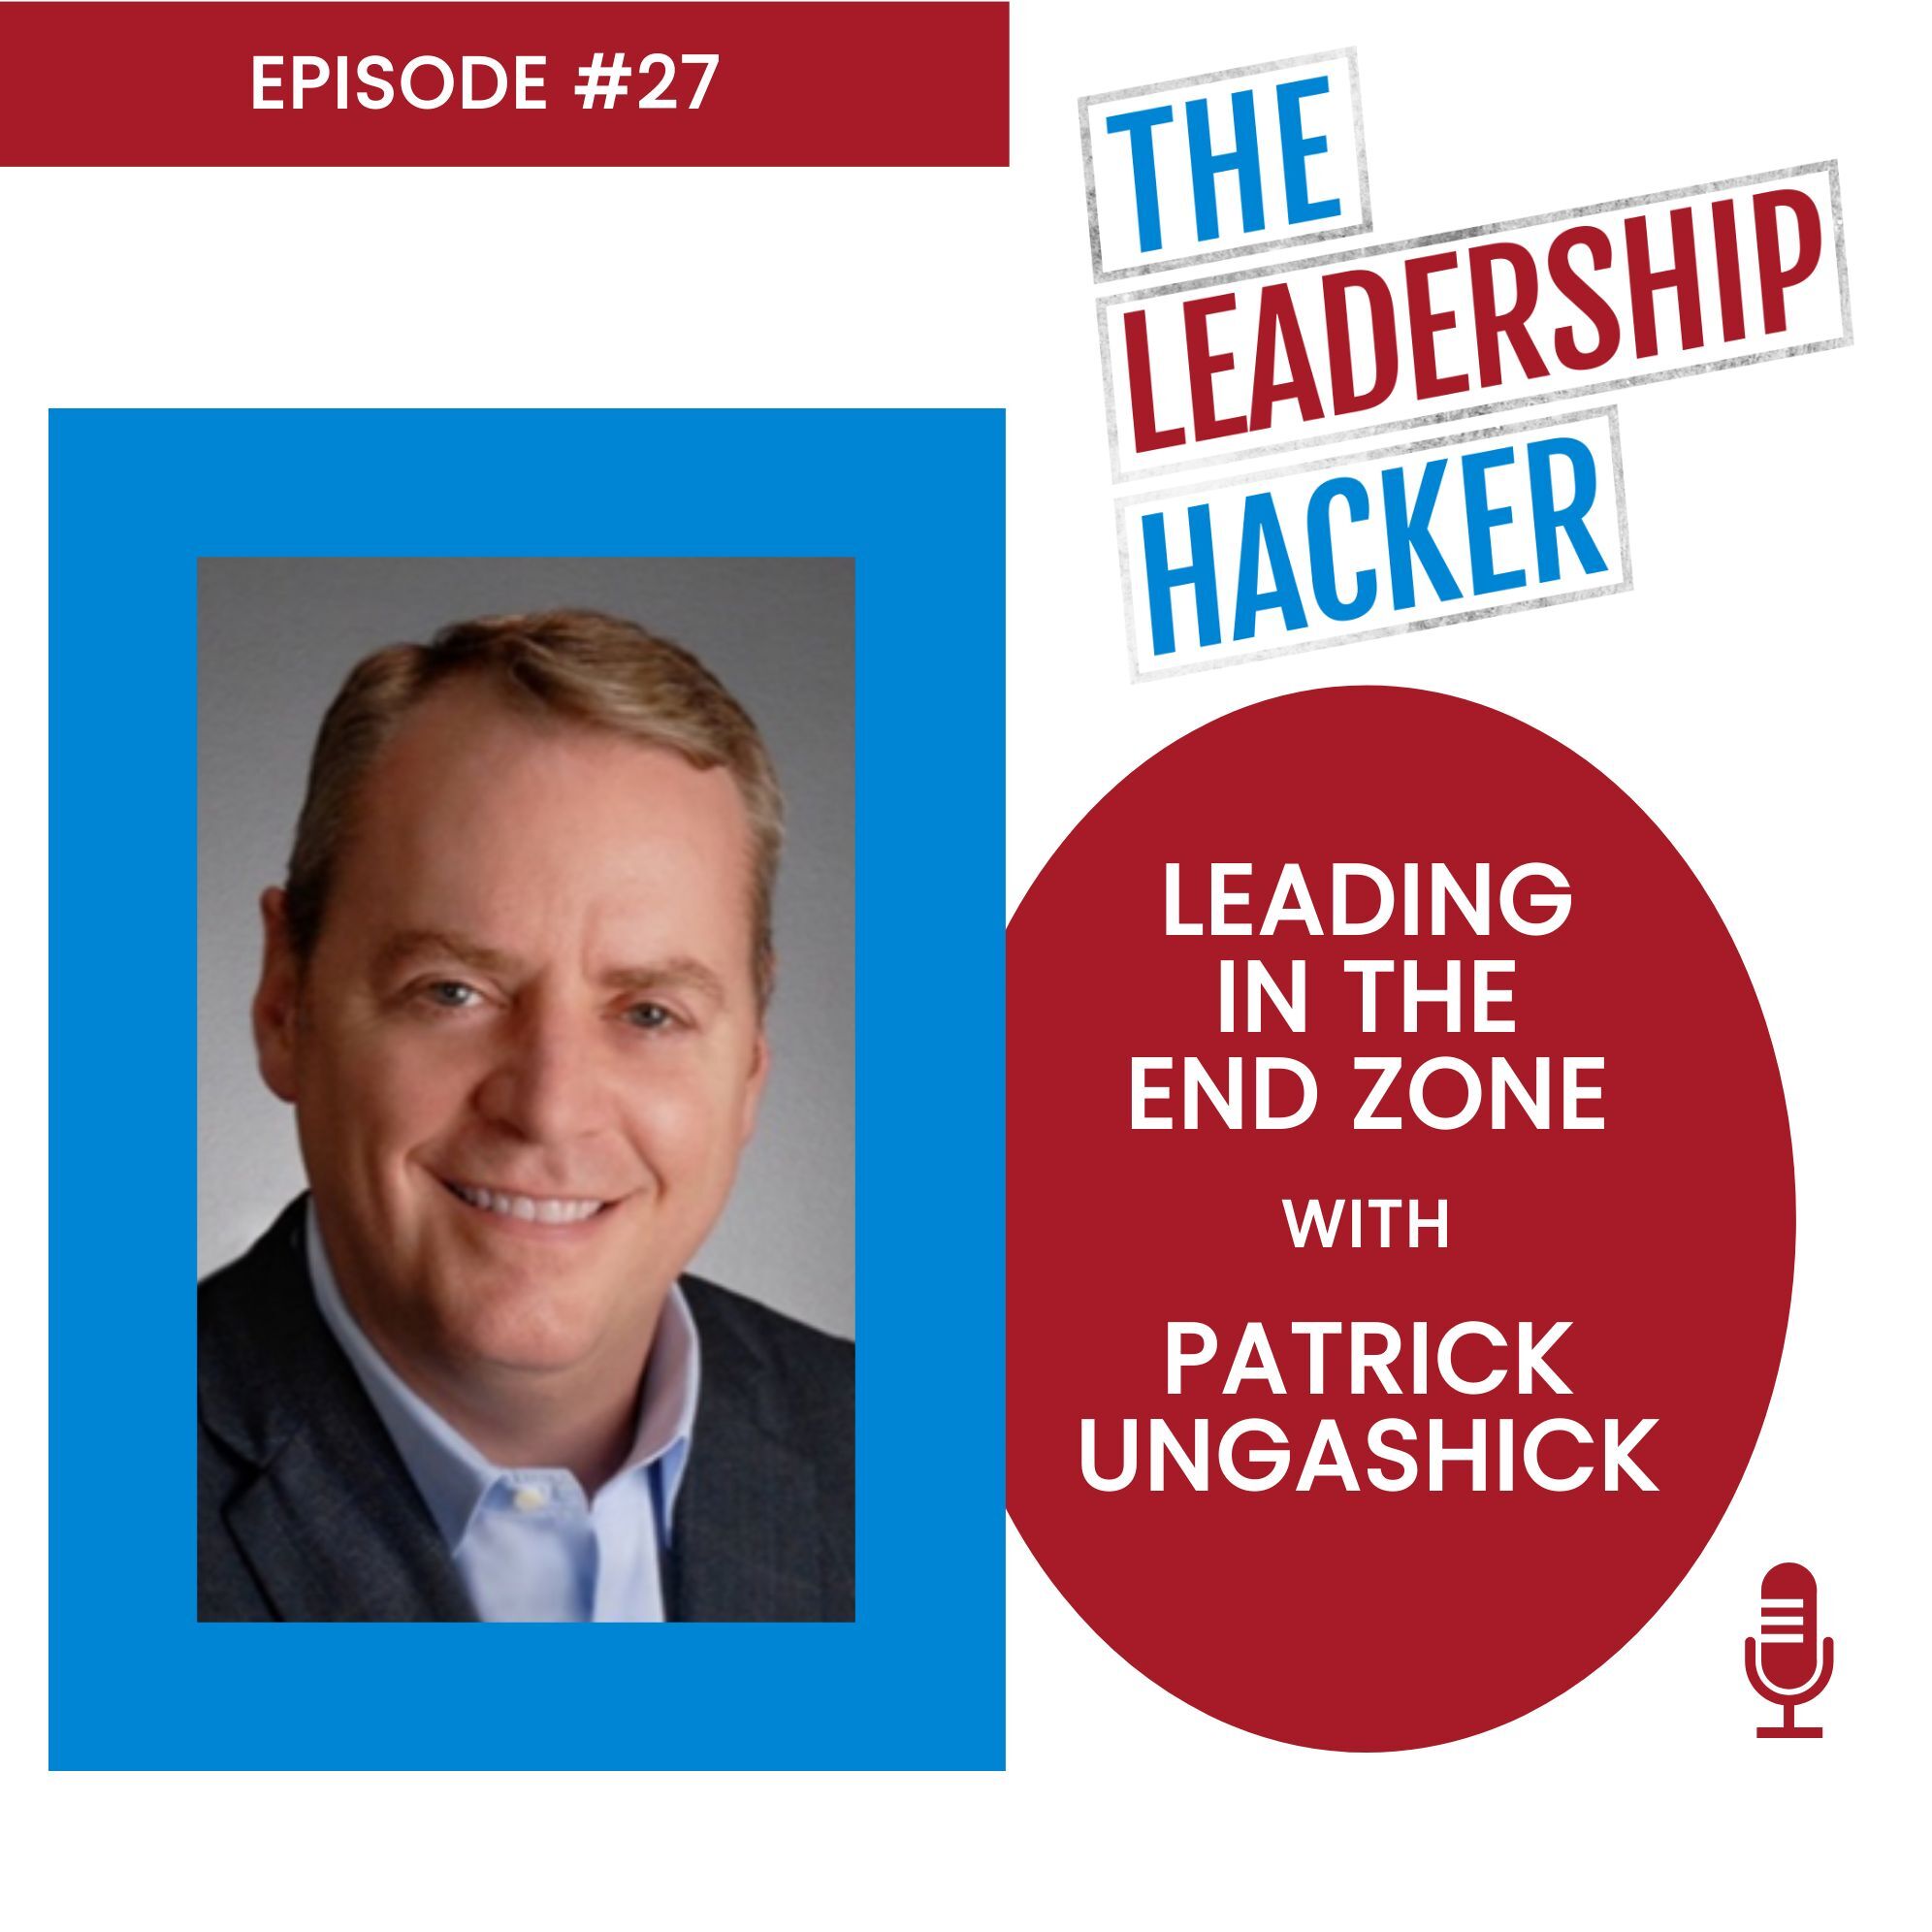 Patrick Ungashick on the Leadership Hacker